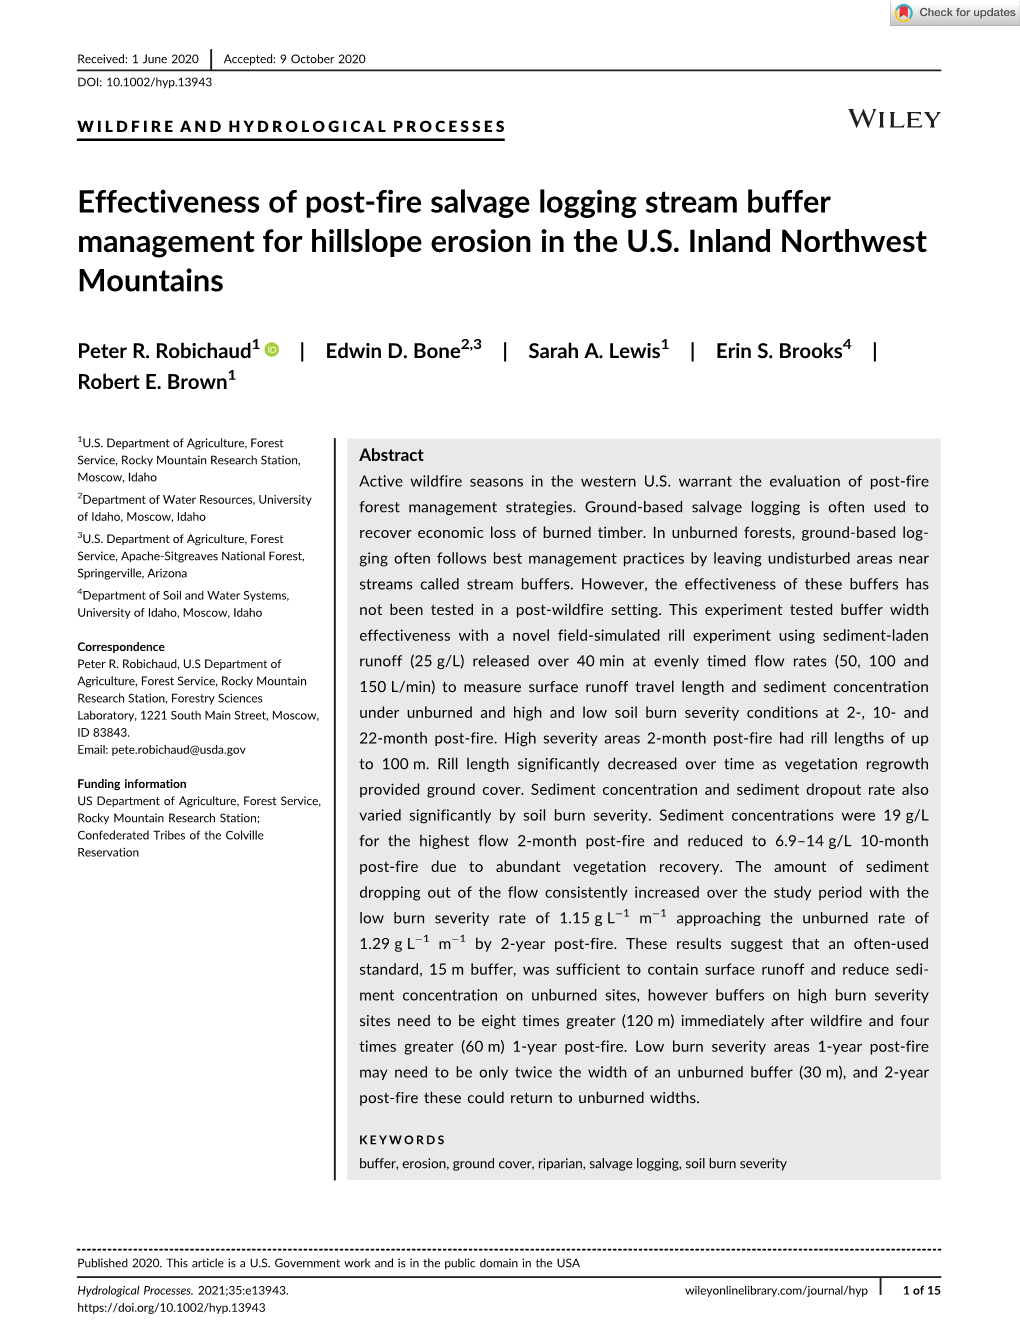 Effectiveness of Post‐Fire Salvage Logging Stream Buffer Management